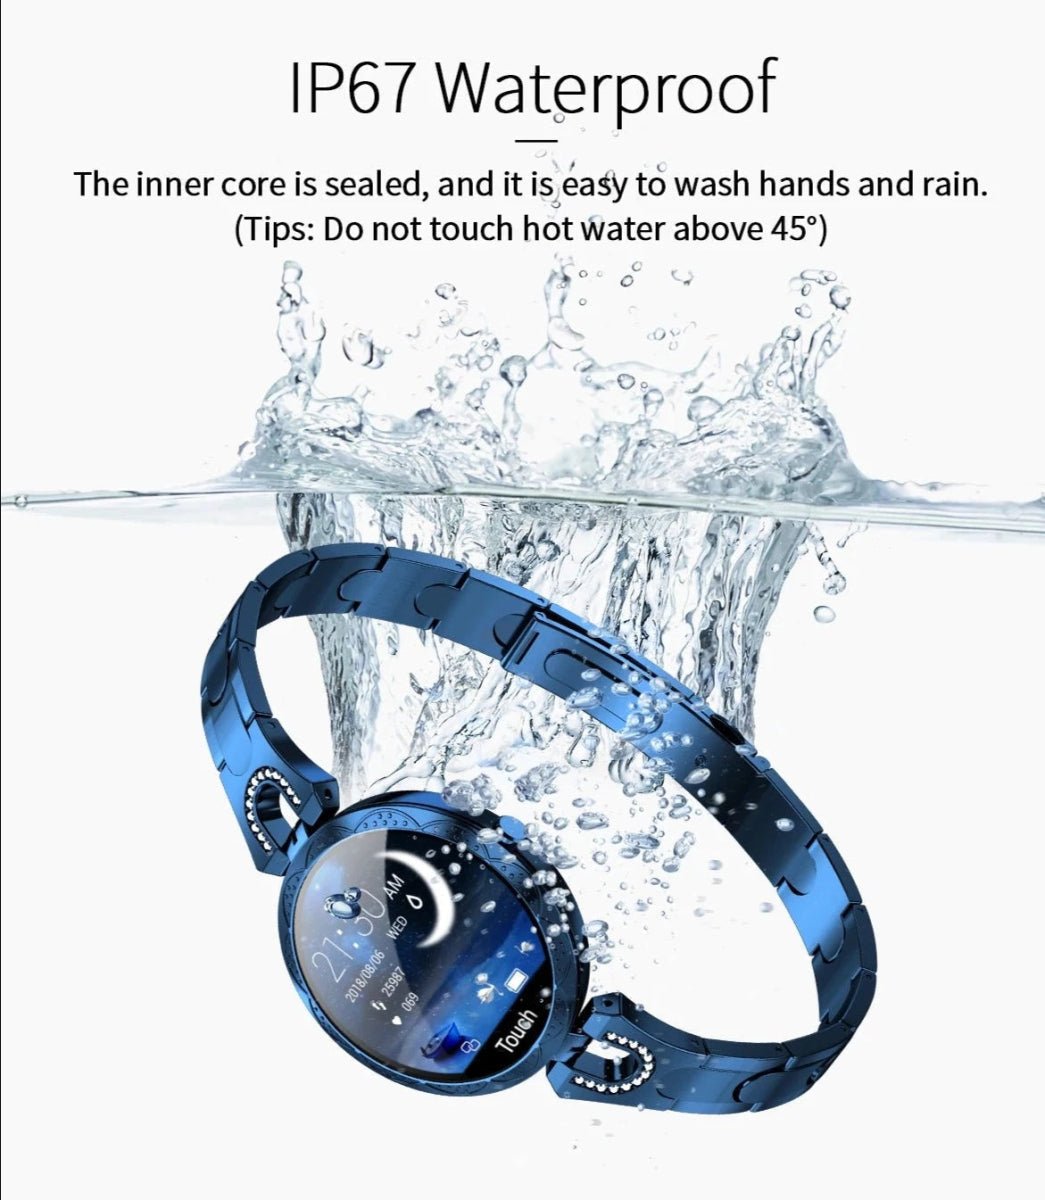 AK15 Bracelet Smart Watch - Uniquely You Online - Watch